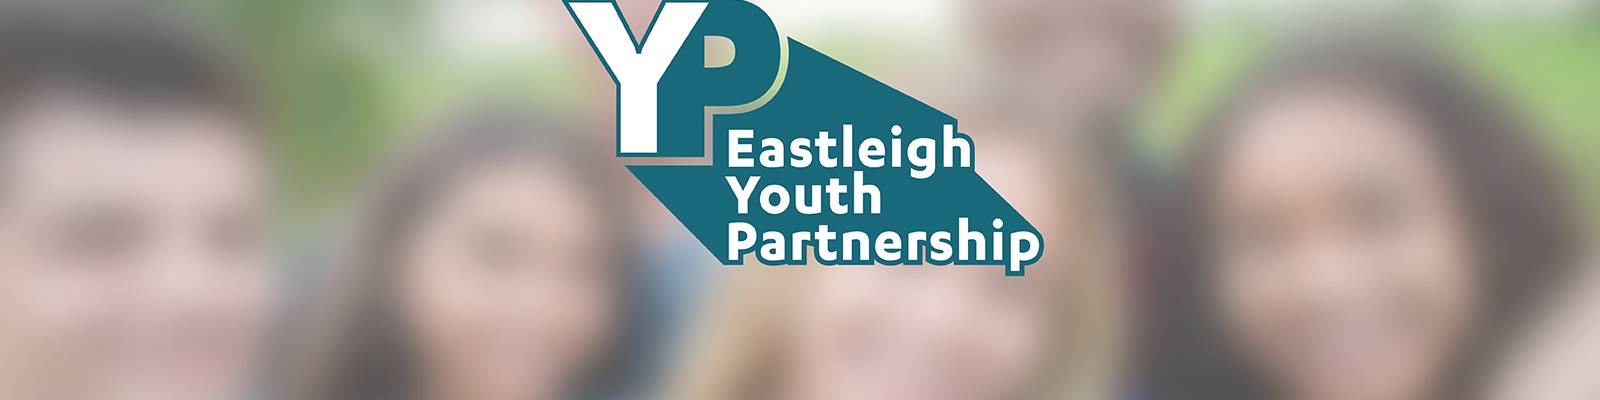 Eastleigh Youth Partnership banner